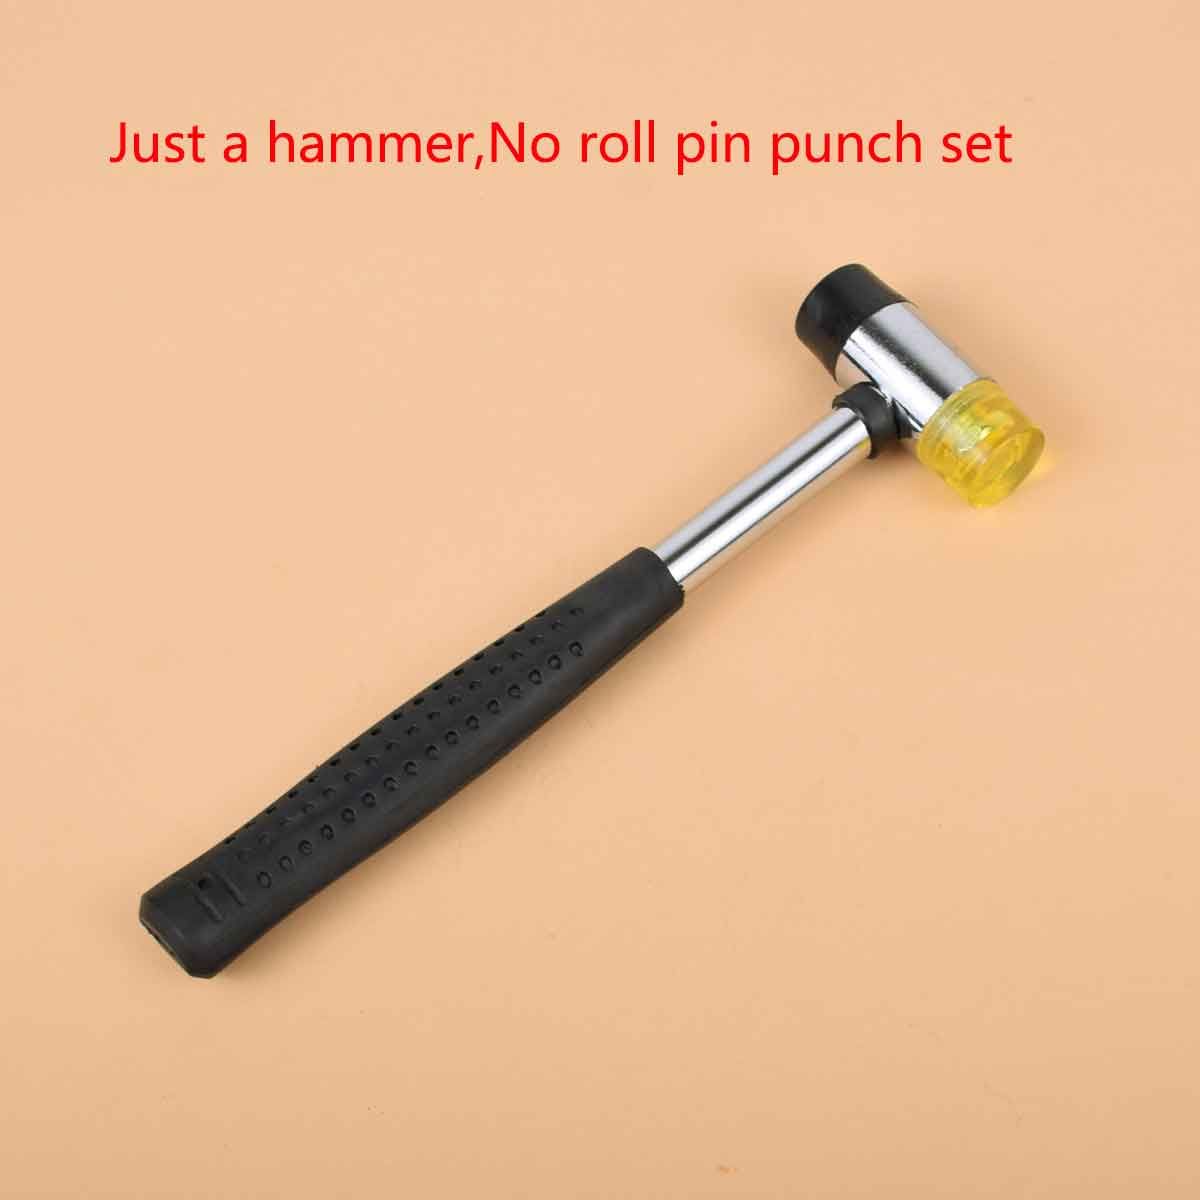 Just a hammer